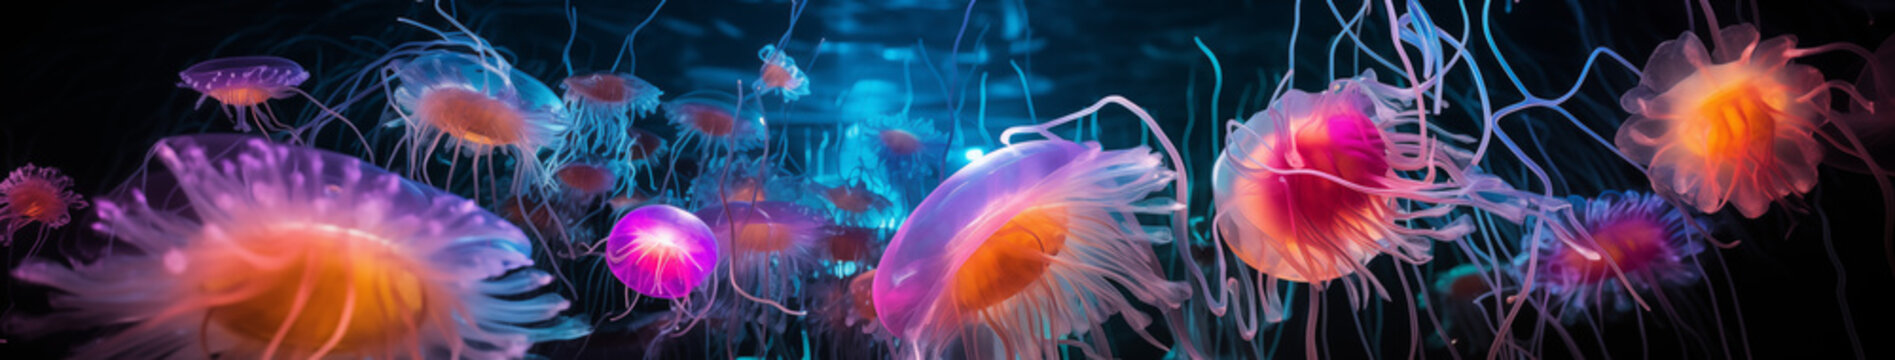 Luminous Jellyfish Ensemble in Ocean Depths